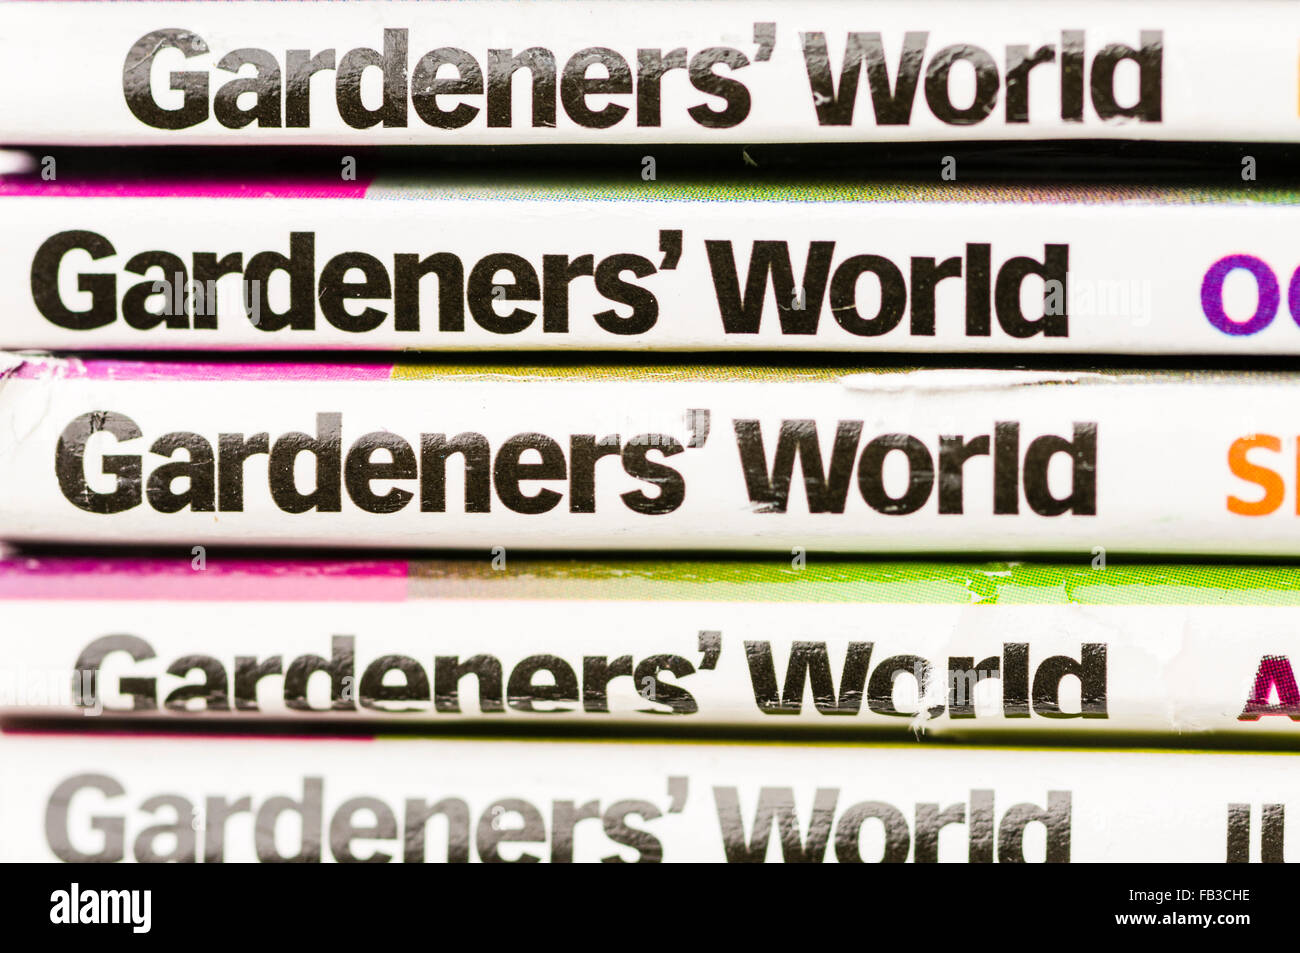 How to Grow a Snowberry Bush  BBC Gardeners World Magazine